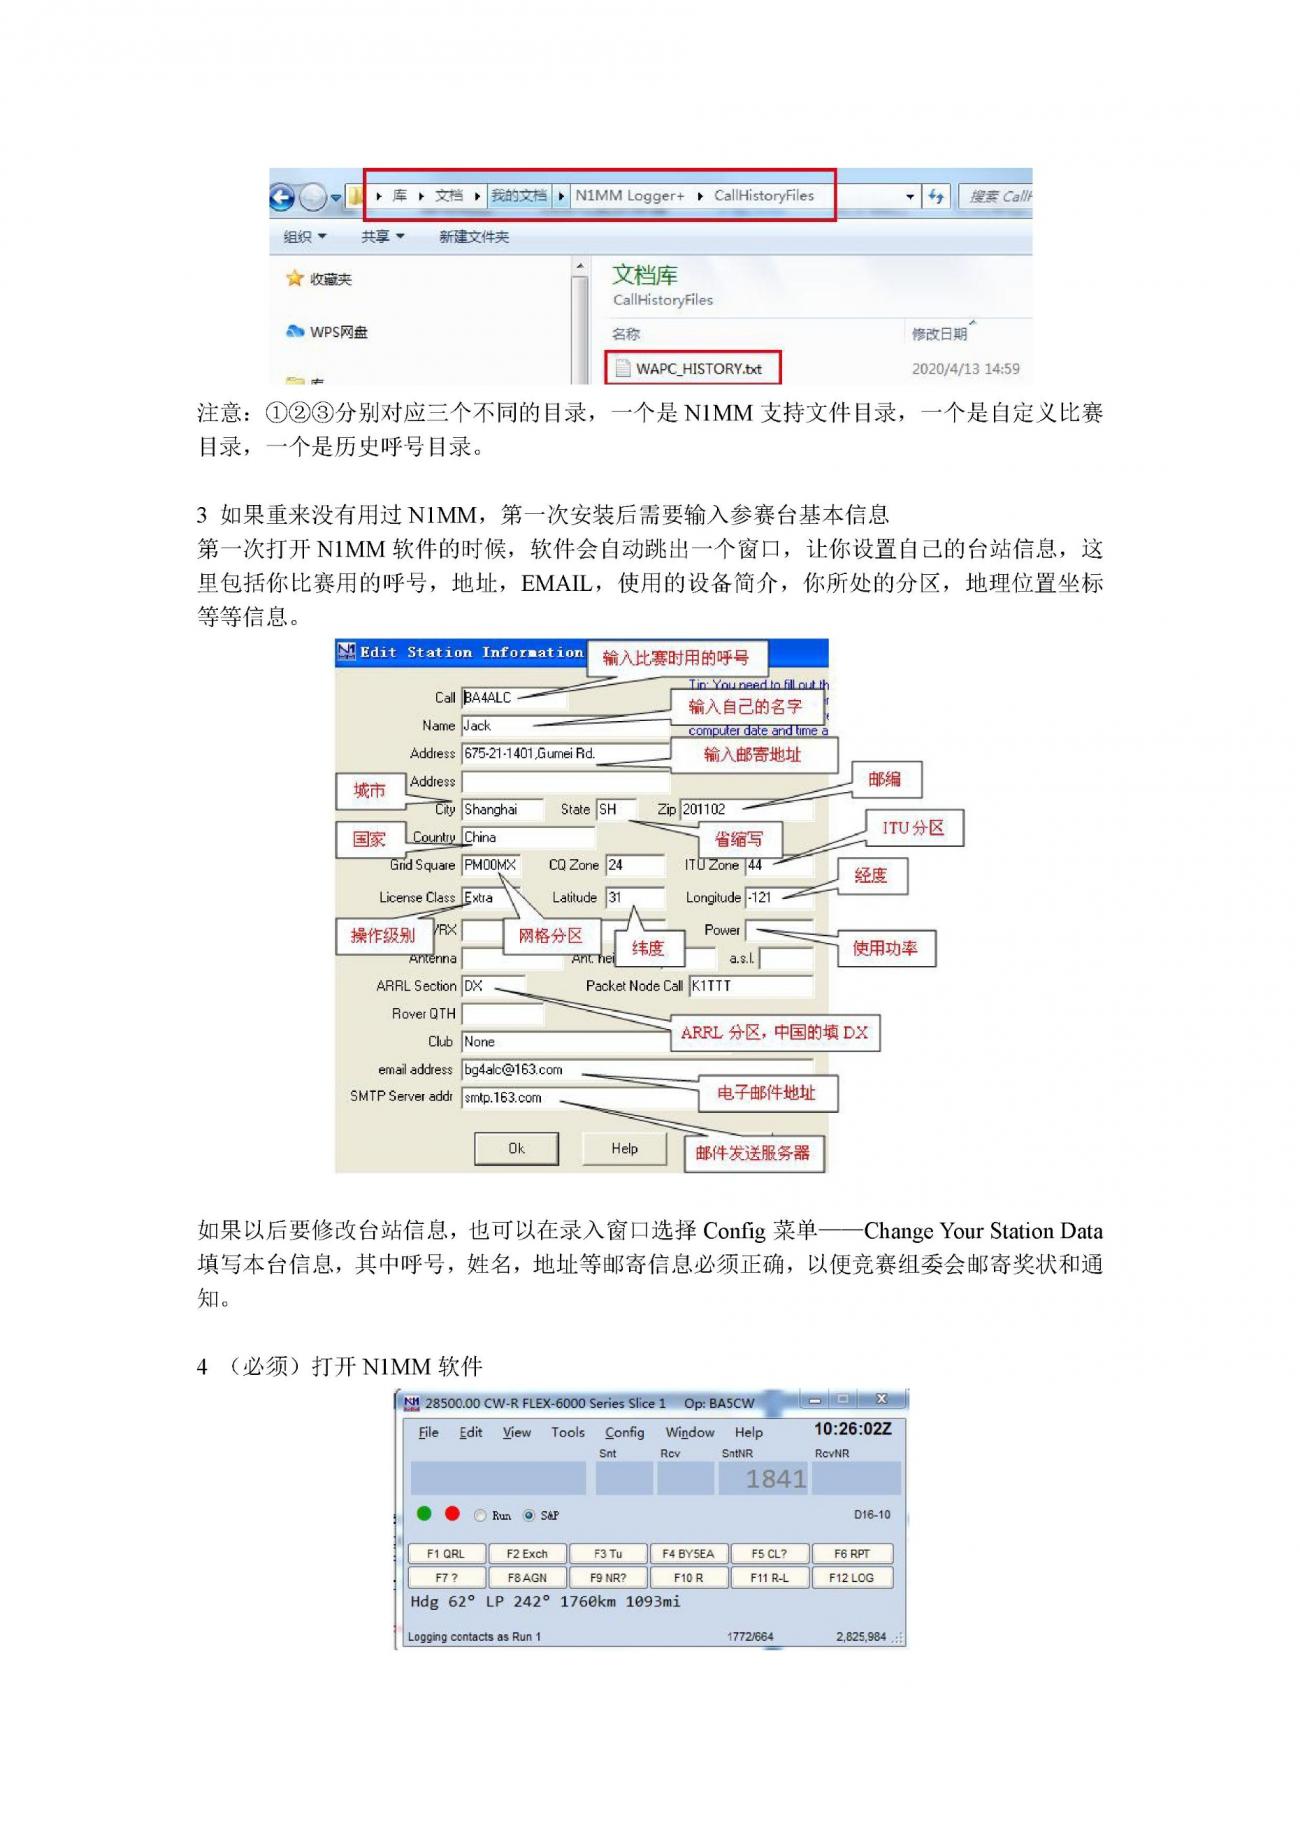 WAPC 通联全中国之省比赛日志软件说明